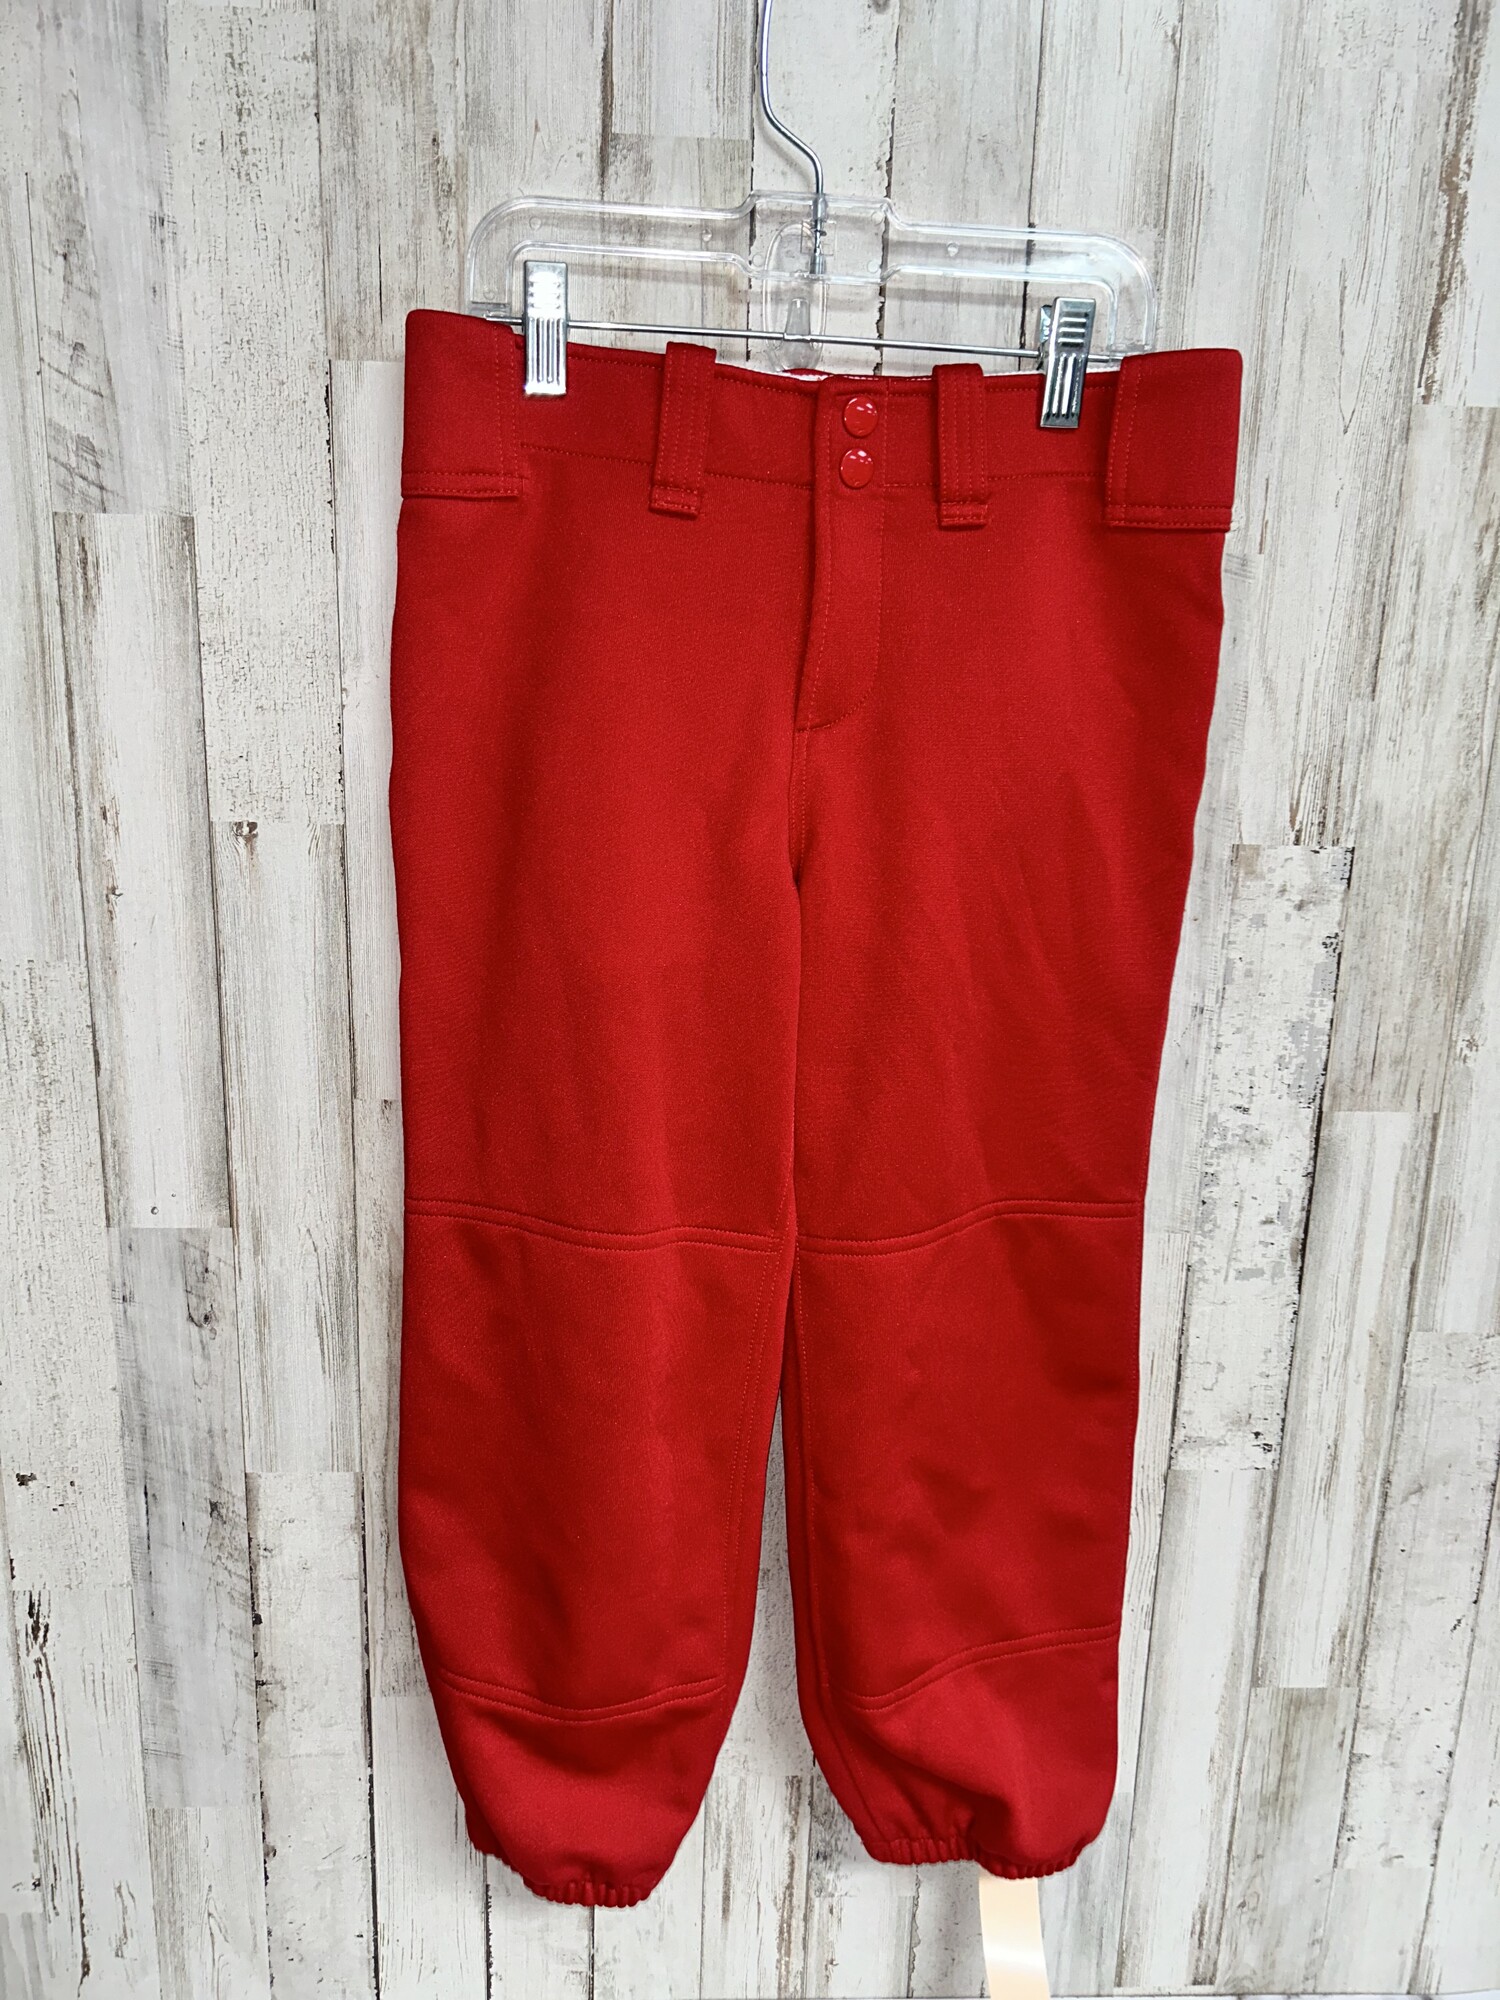 14/16 Red Softball Pants | The Plaid Pecan